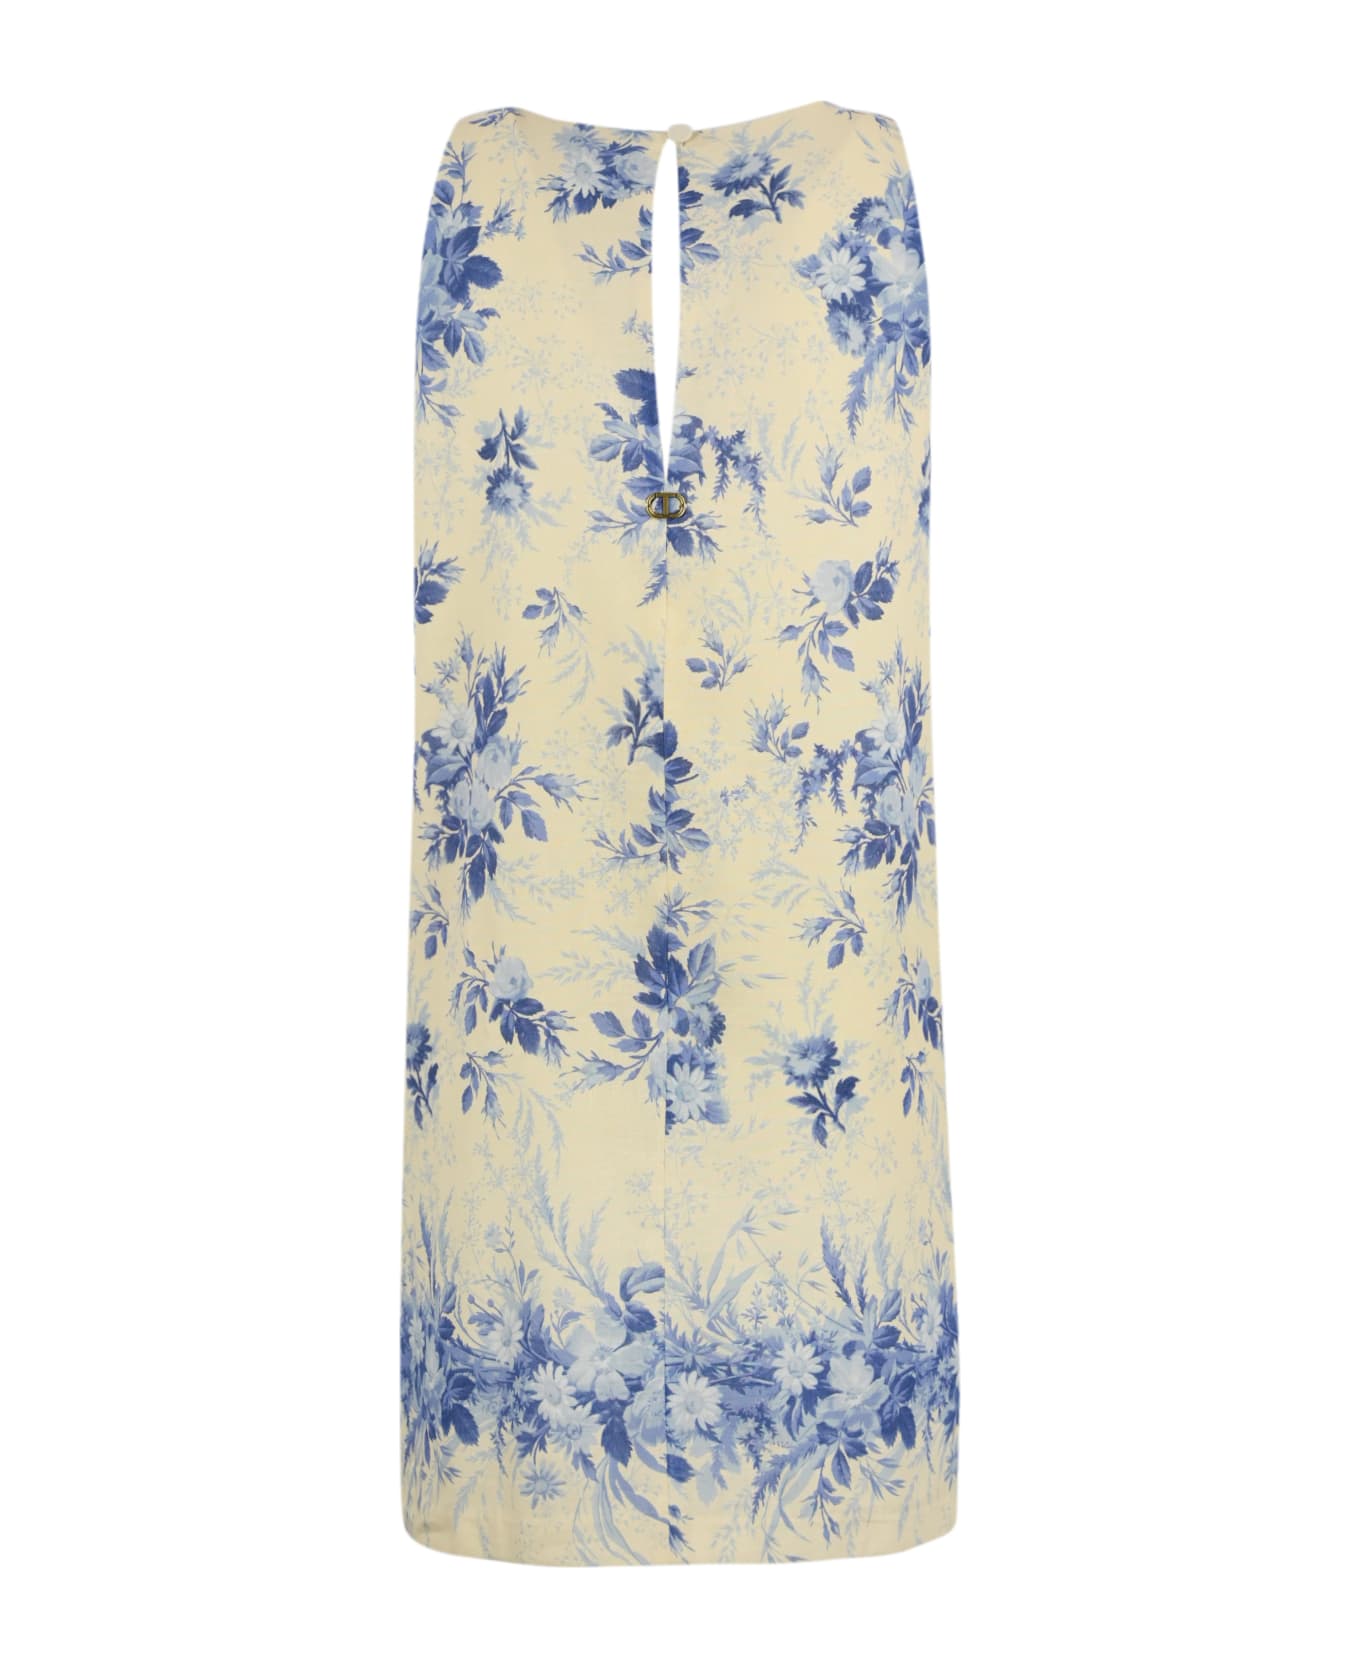 TwinSet Floral Print Linen Blend Dress - Avorio/blue